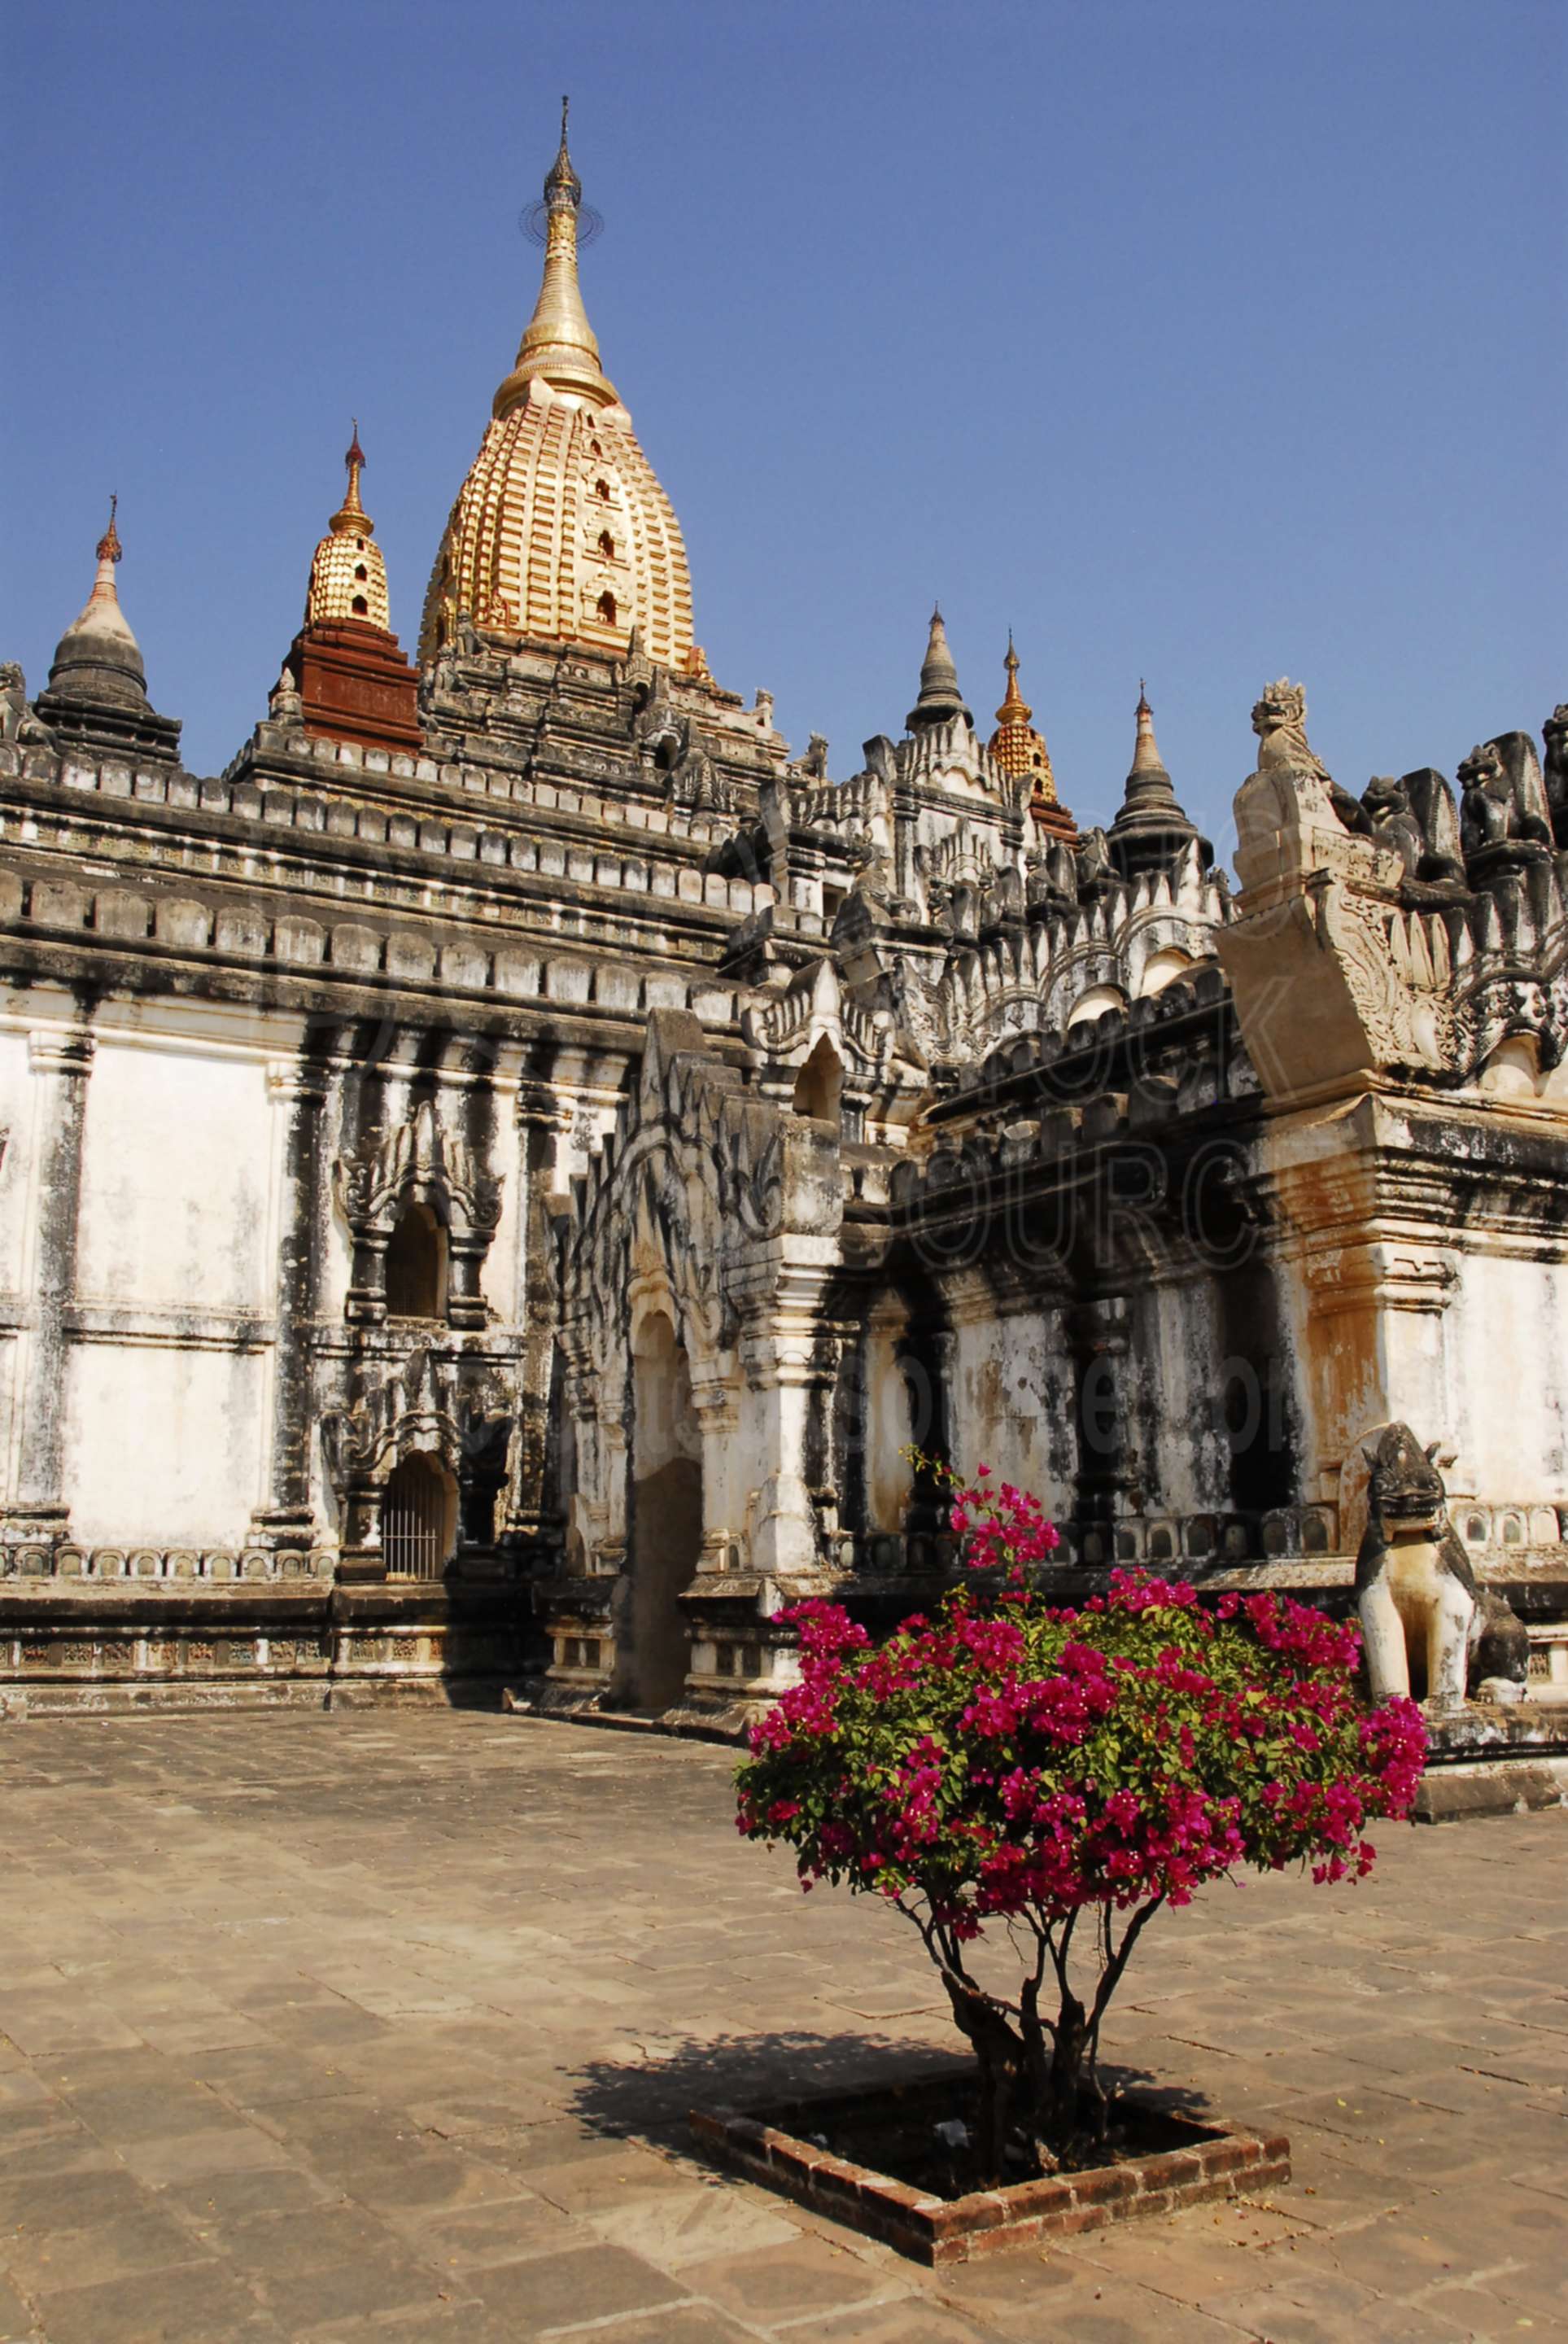 Ananda Pagoda Bougainvillea,myanmar,ananda,ananda pahto,paya,temple,pagoda,religion,temples,buddhism,religious,shrine,bougainvillea